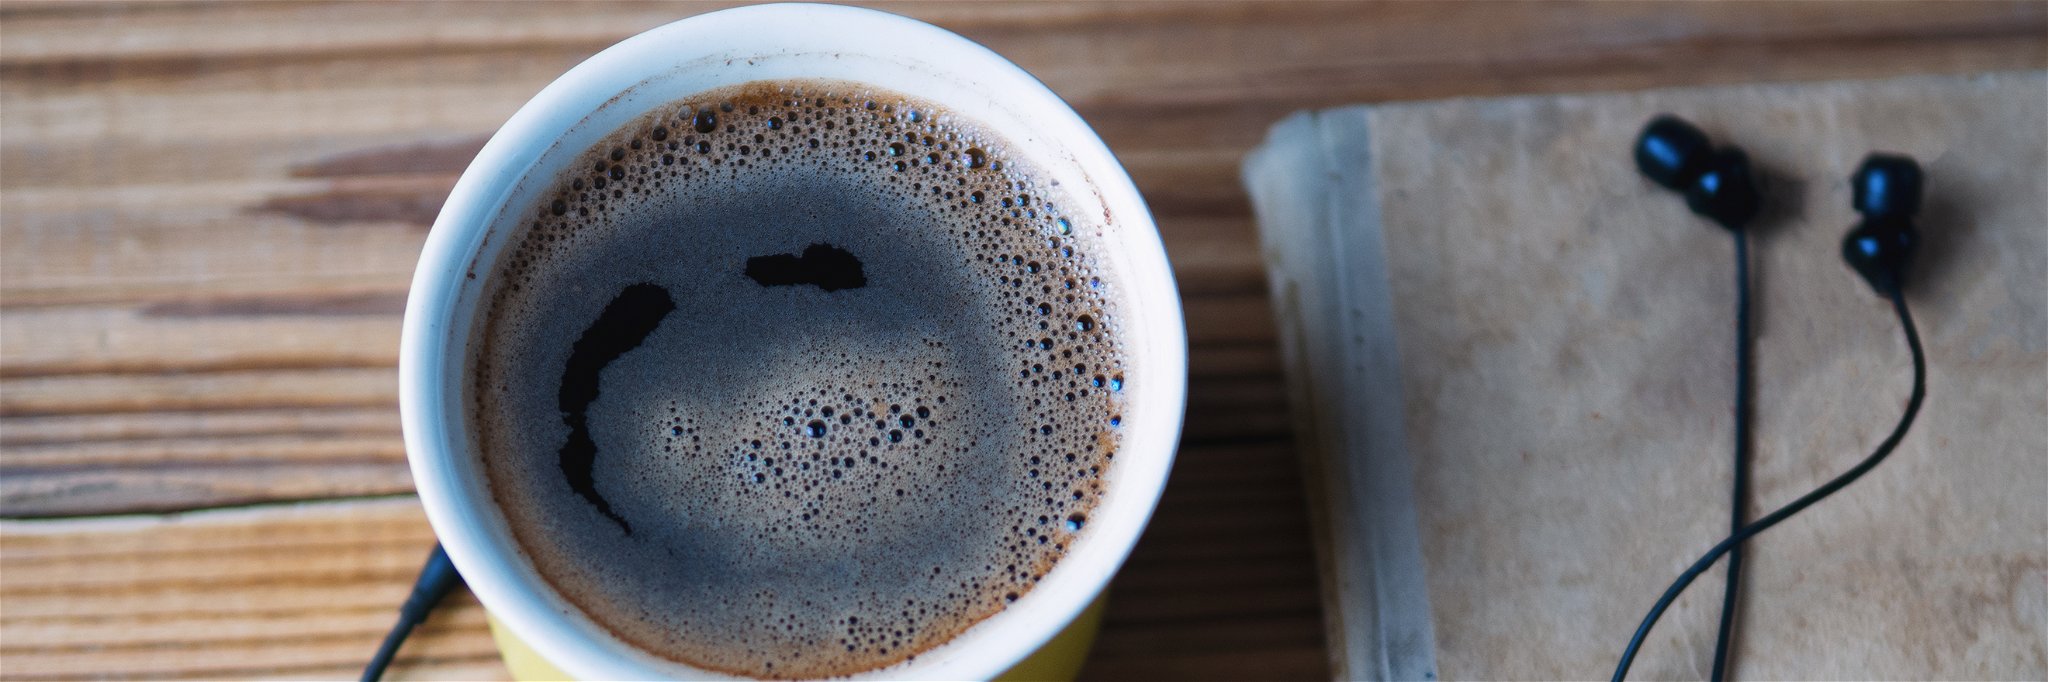 De'Longhi stellt erstmalig Kaffee im deutschsprachigen Audioformat vor.